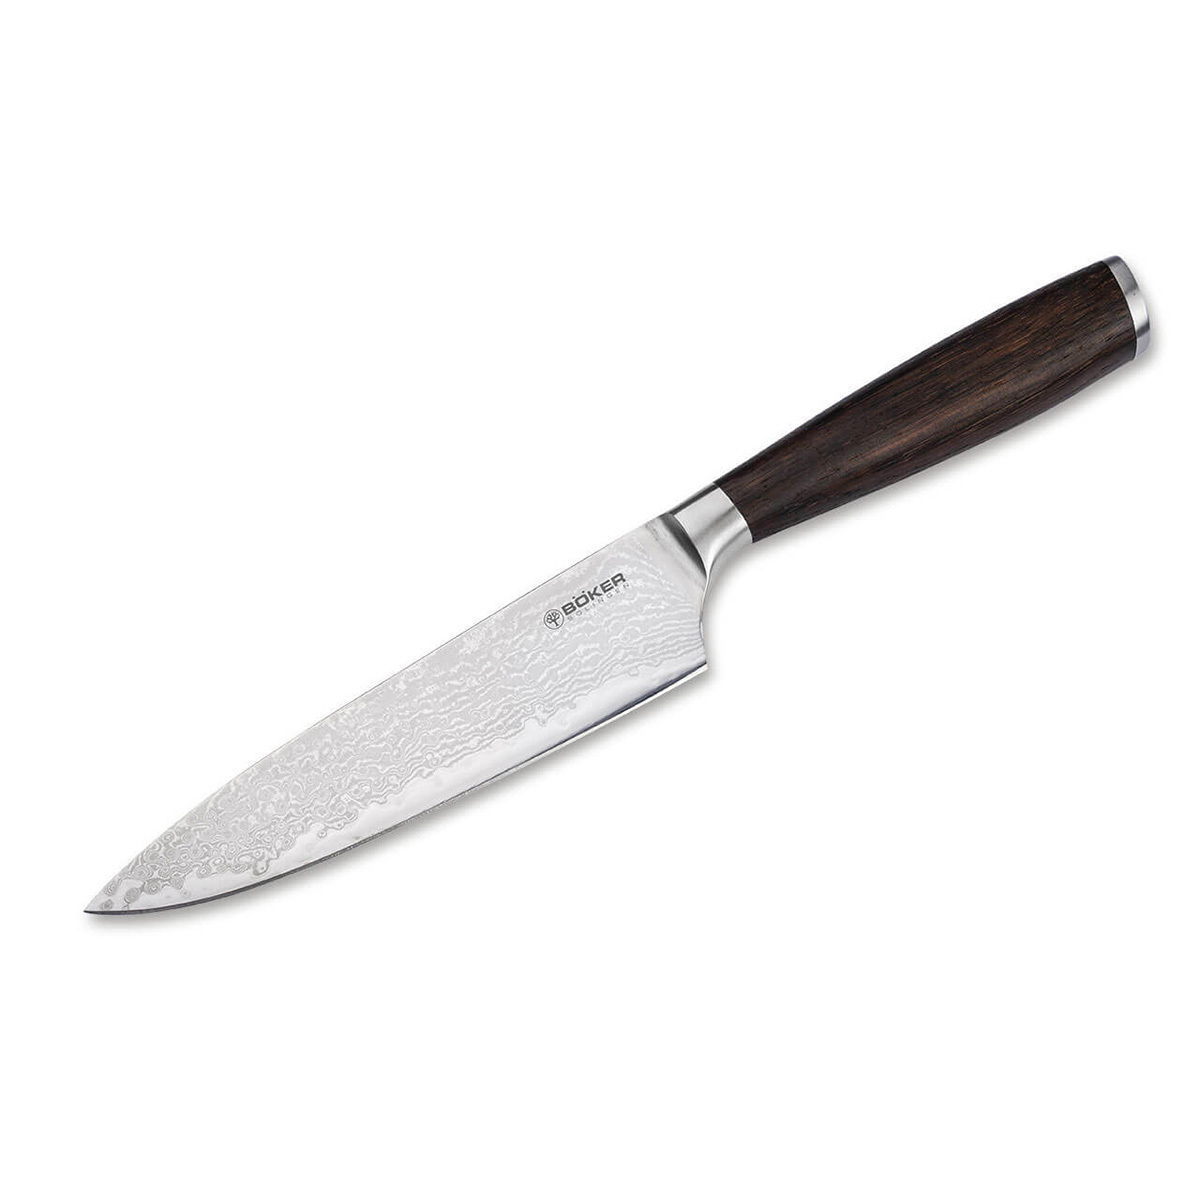 Поварской кухонный шеф нож Boker Meisterklinge Damast Chef's Knife Small, сталь дамаск, рукоять дуб - фото 1